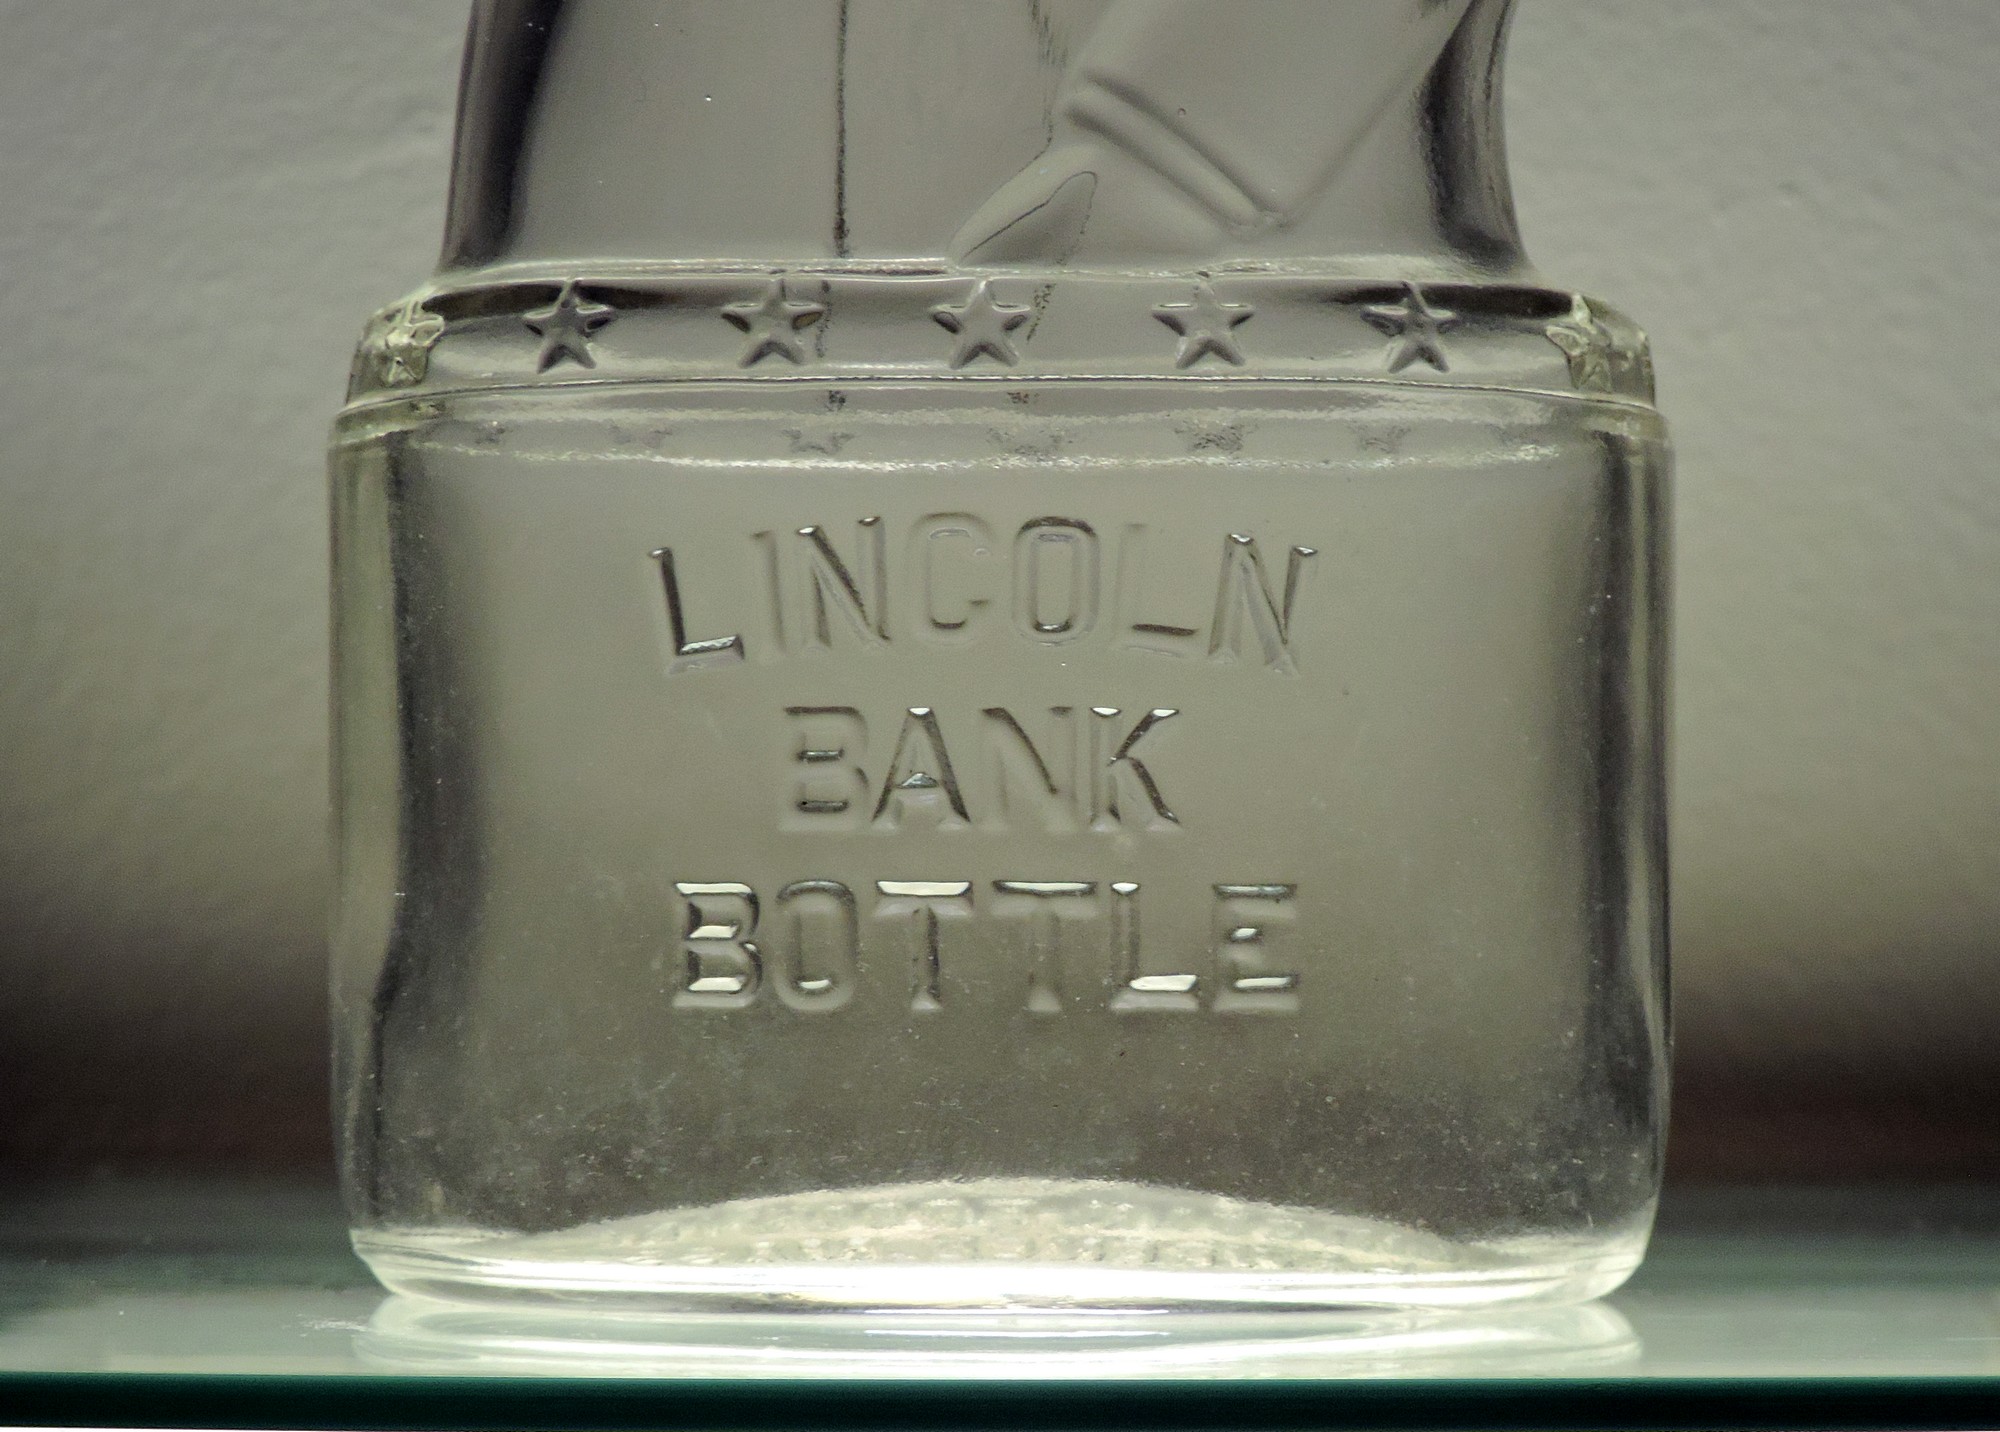 16 Ounce Lincoln Bank Bottle (Photo 7)